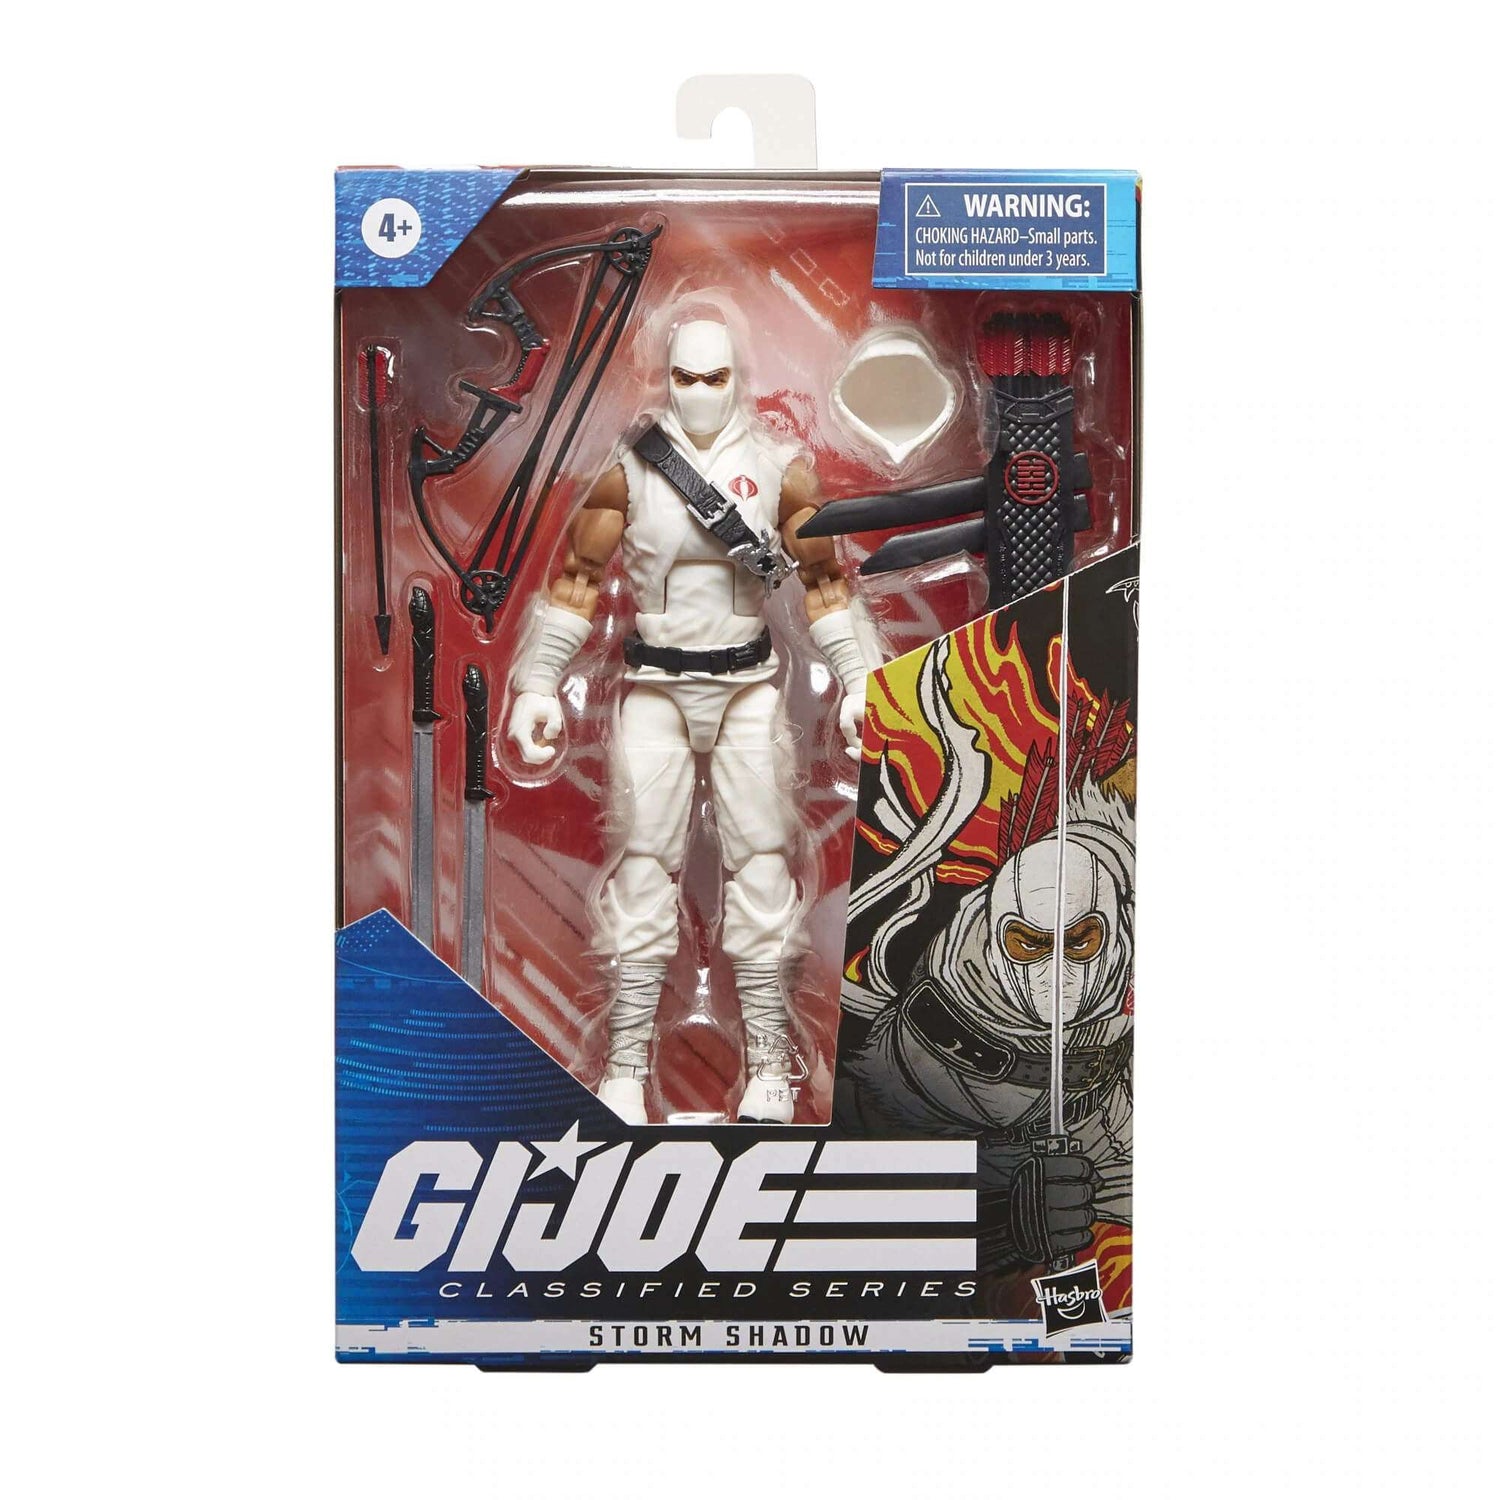 Hasbro G.I. Joe Classified Series Storm Shadow action figure in packaging